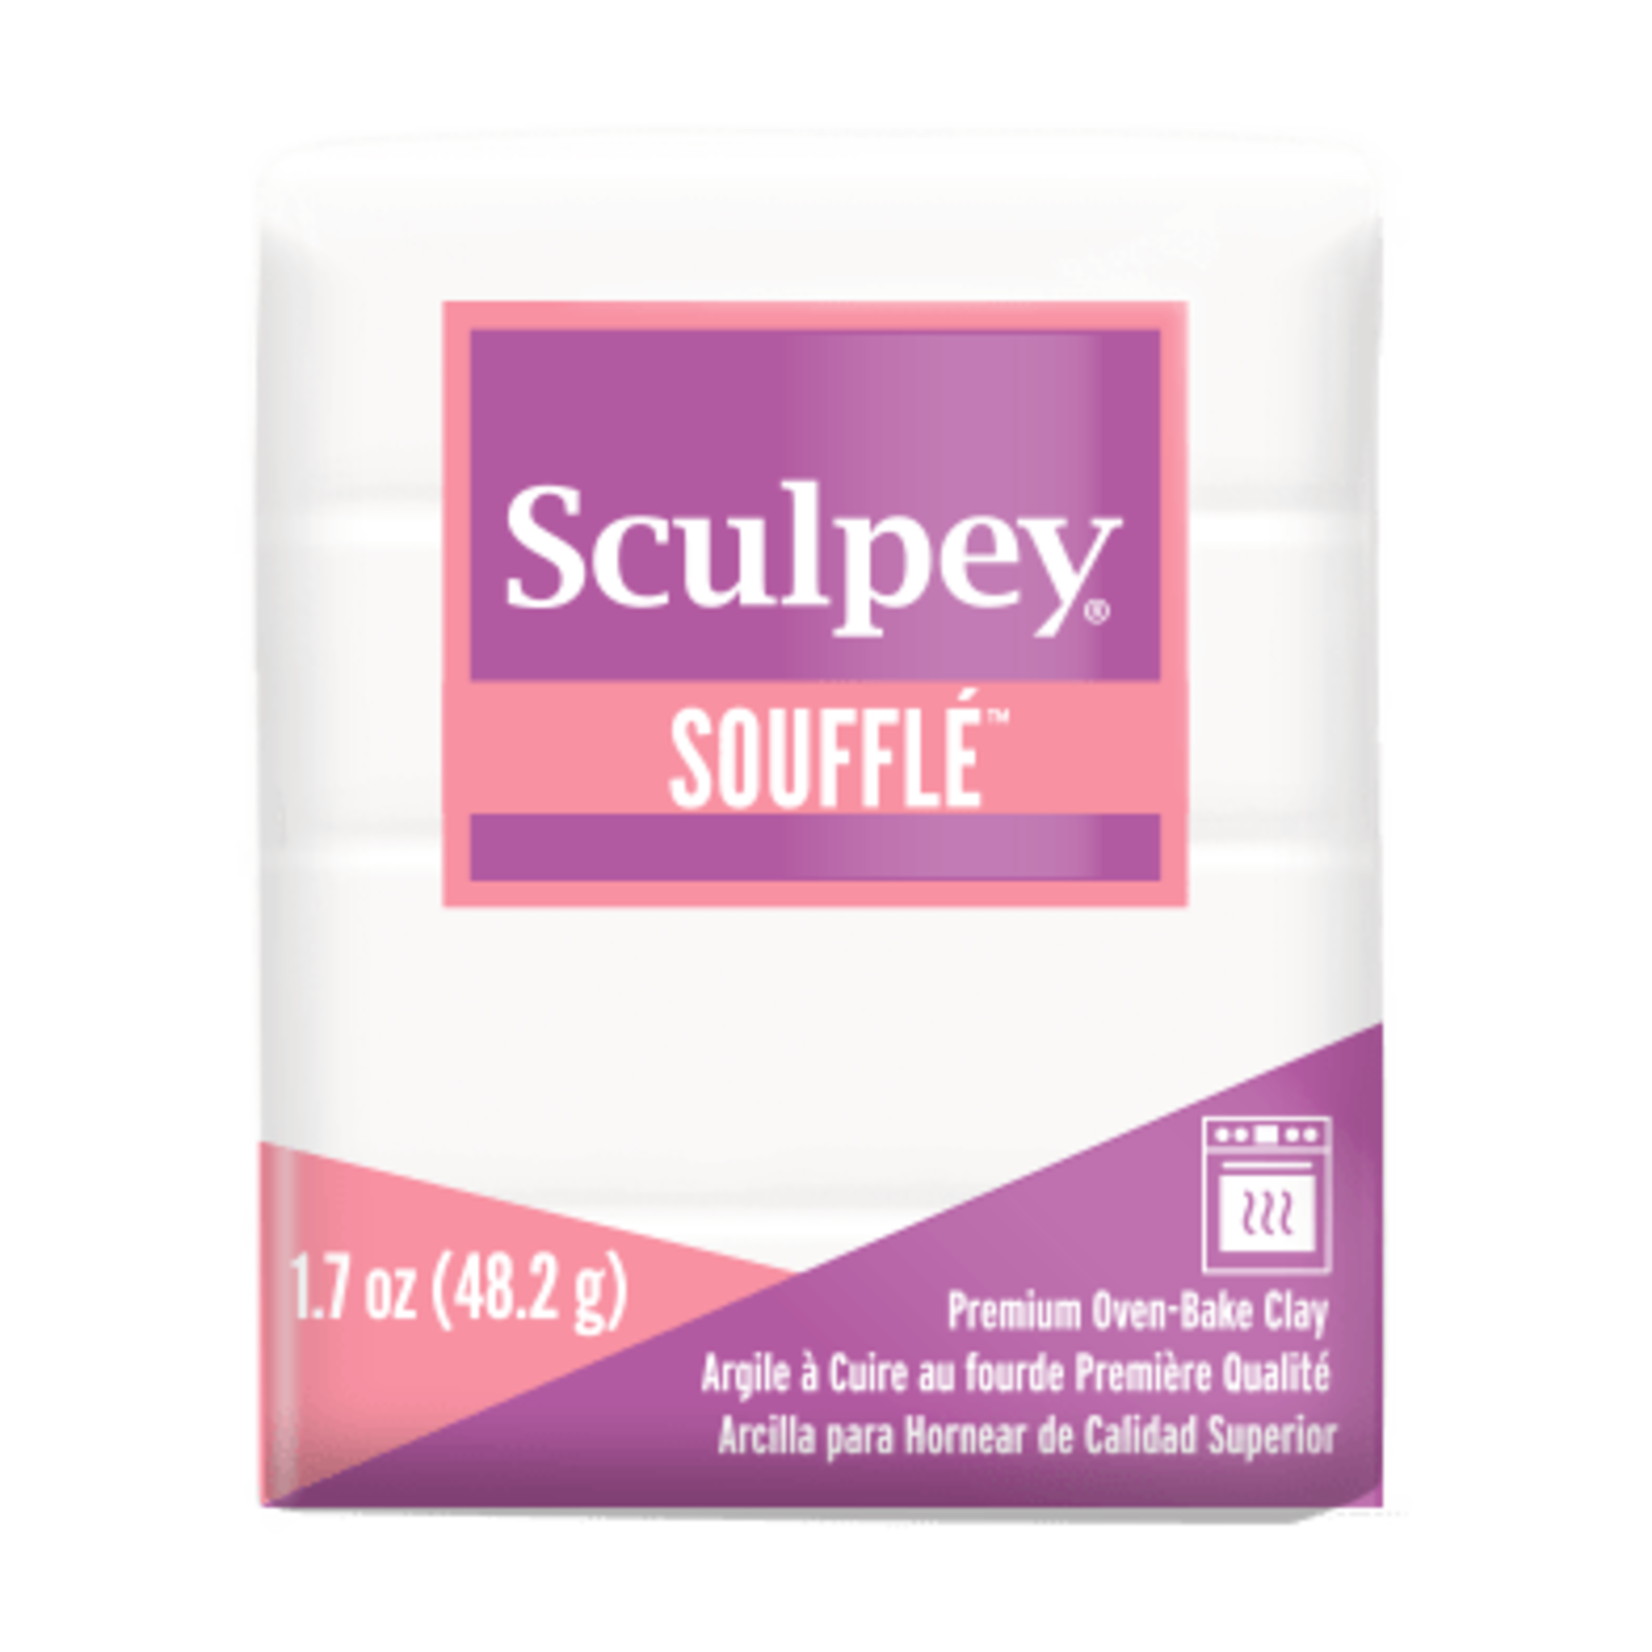 Sculpey Souffle -- Igloo